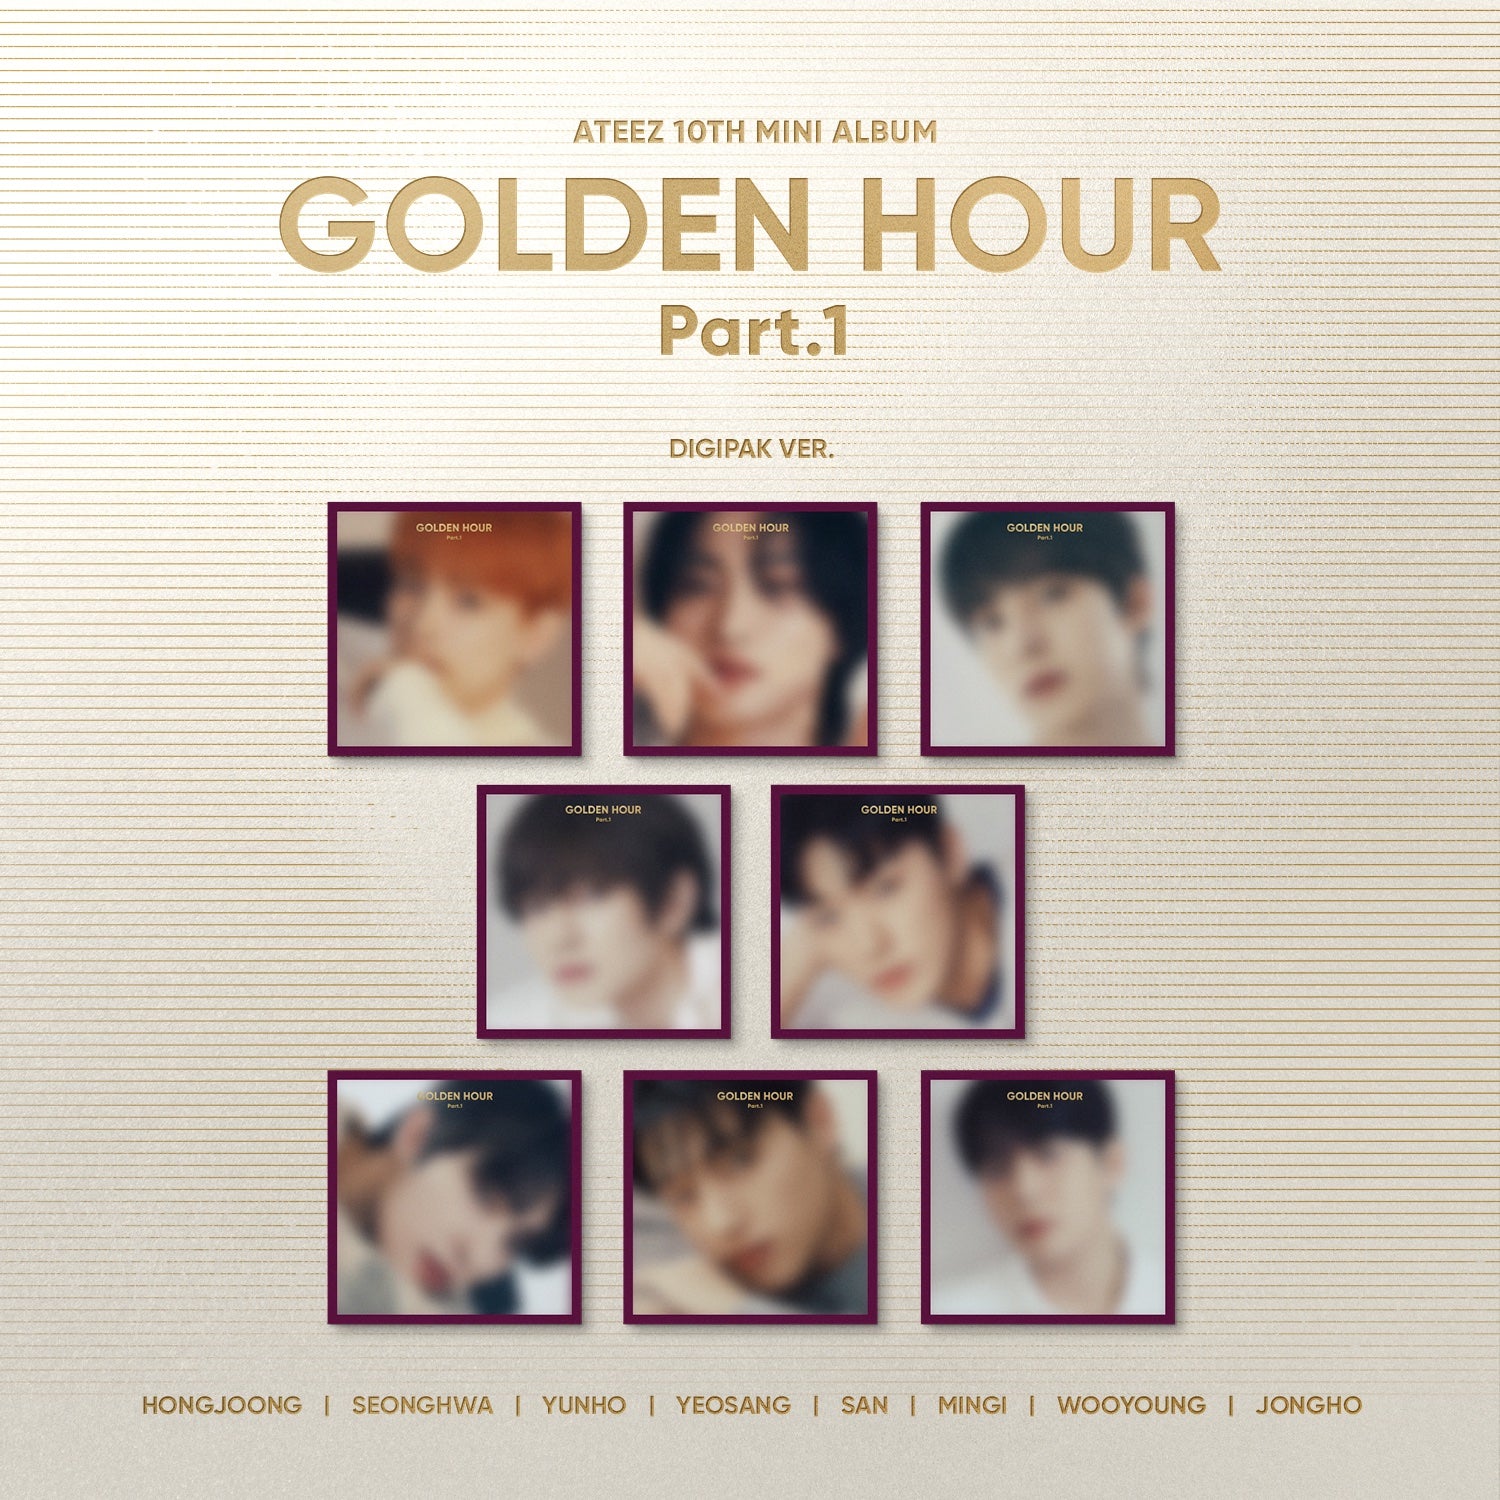 PREORDER ATEEZ Golden Hour Part 1 Digipak Album